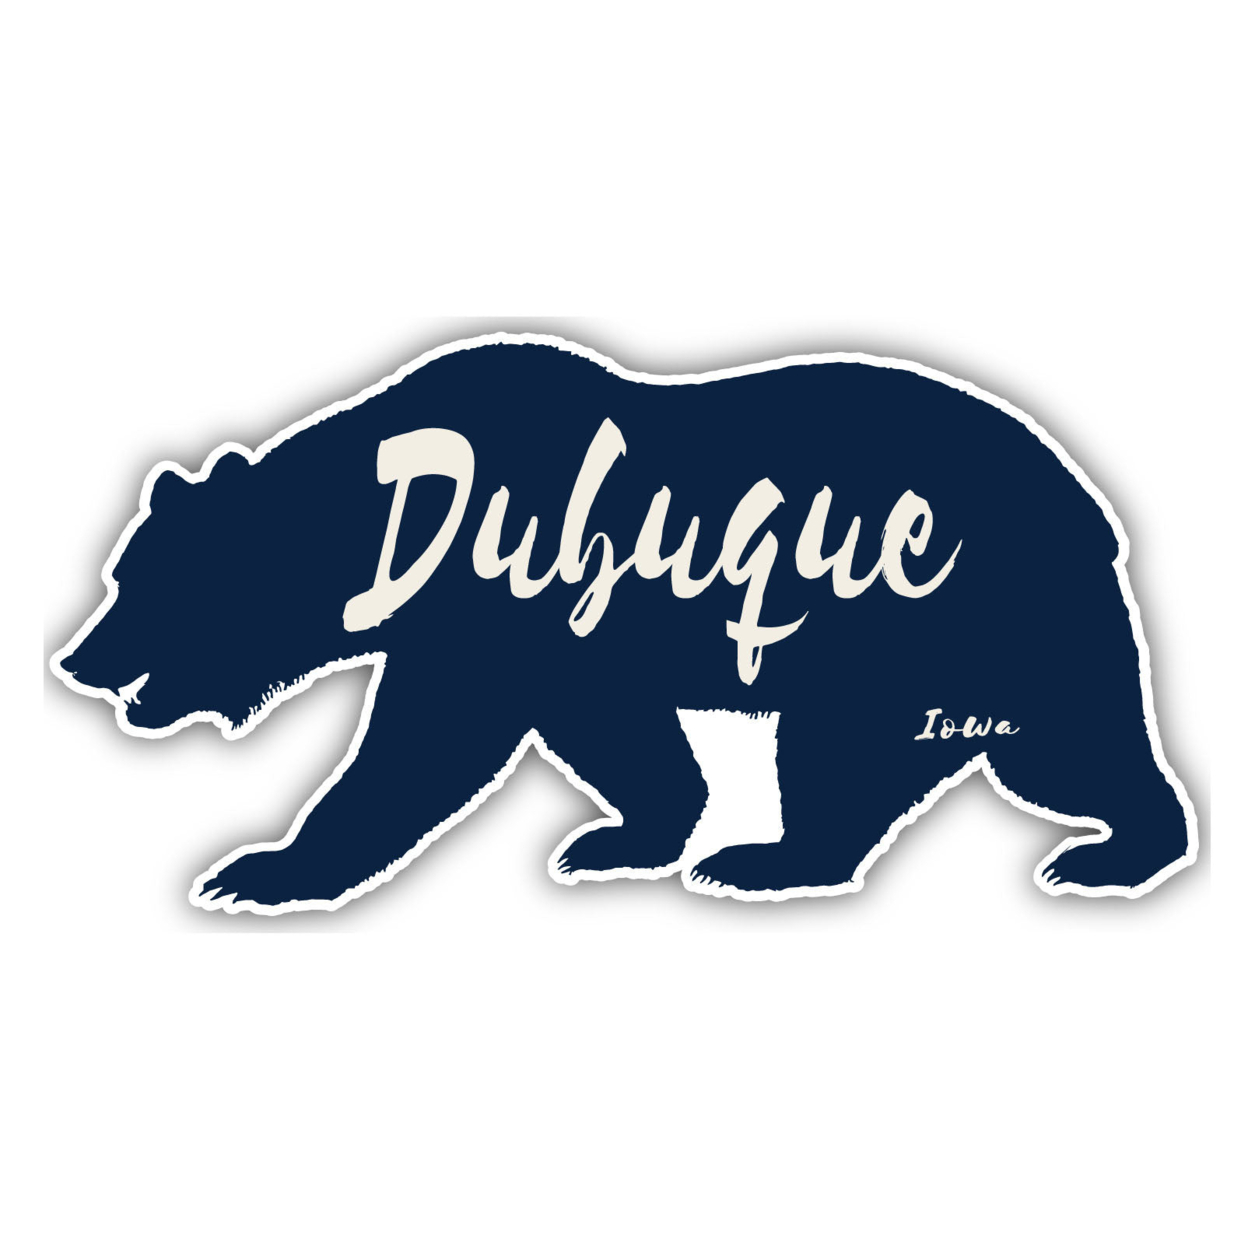 Dubuque Iowa Souvenir Decorative Stickers (Choose Theme And Size) - 4-Pack, 4-Inch, Bear